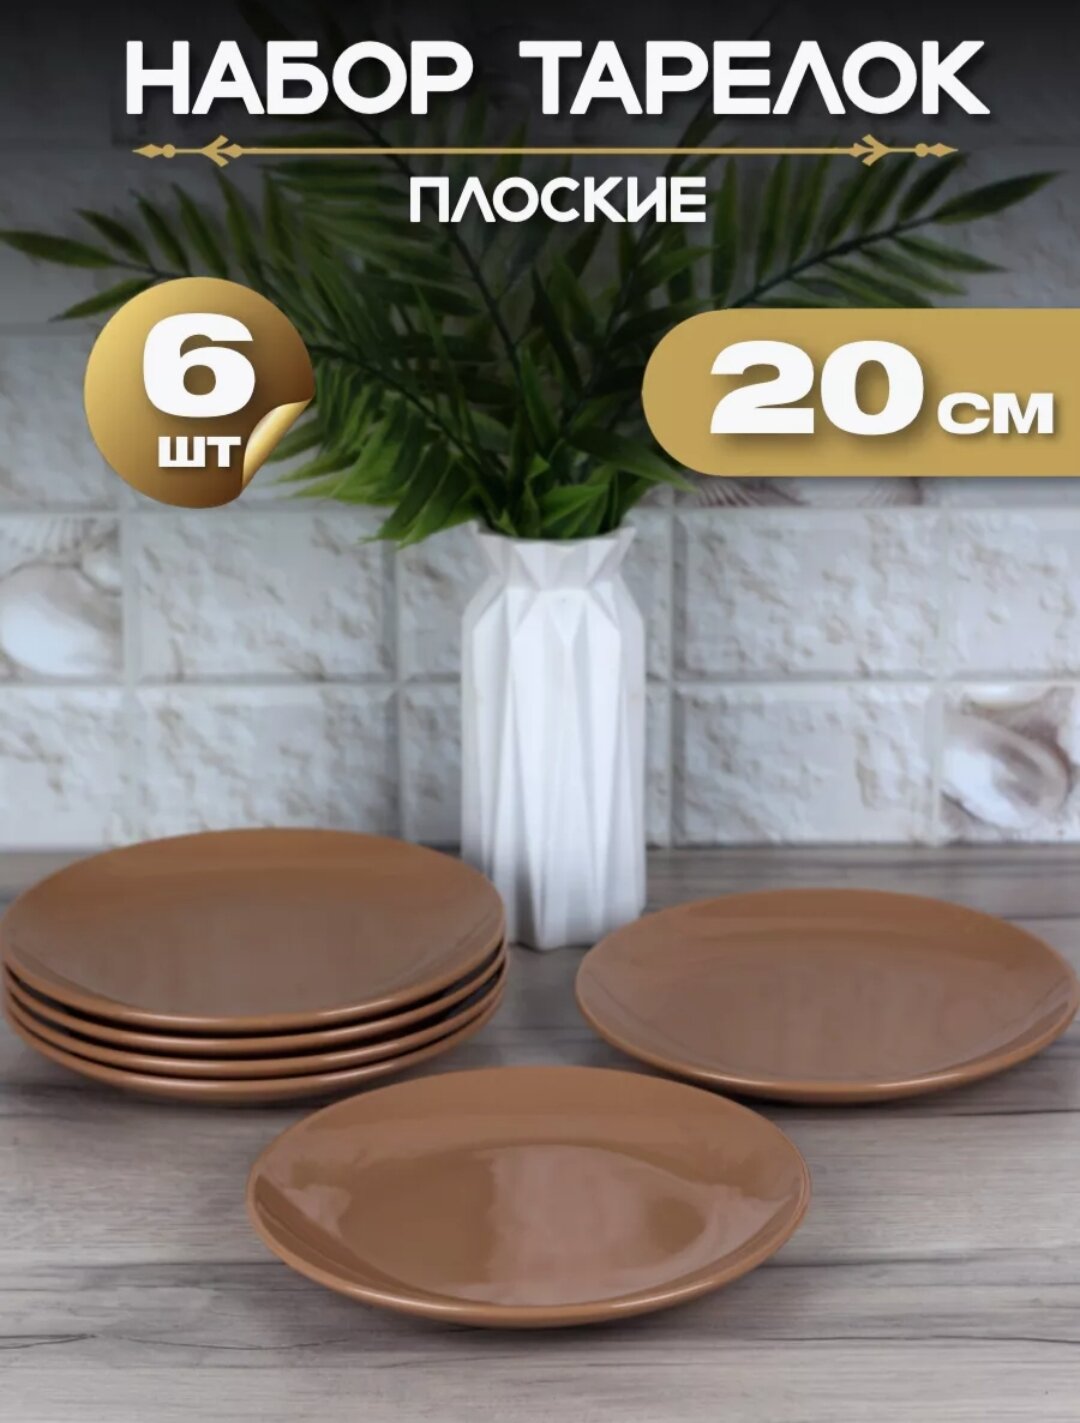 Тарелка плоская "Шоколад глянец" d20 см/ Набор тарелок 6 шт